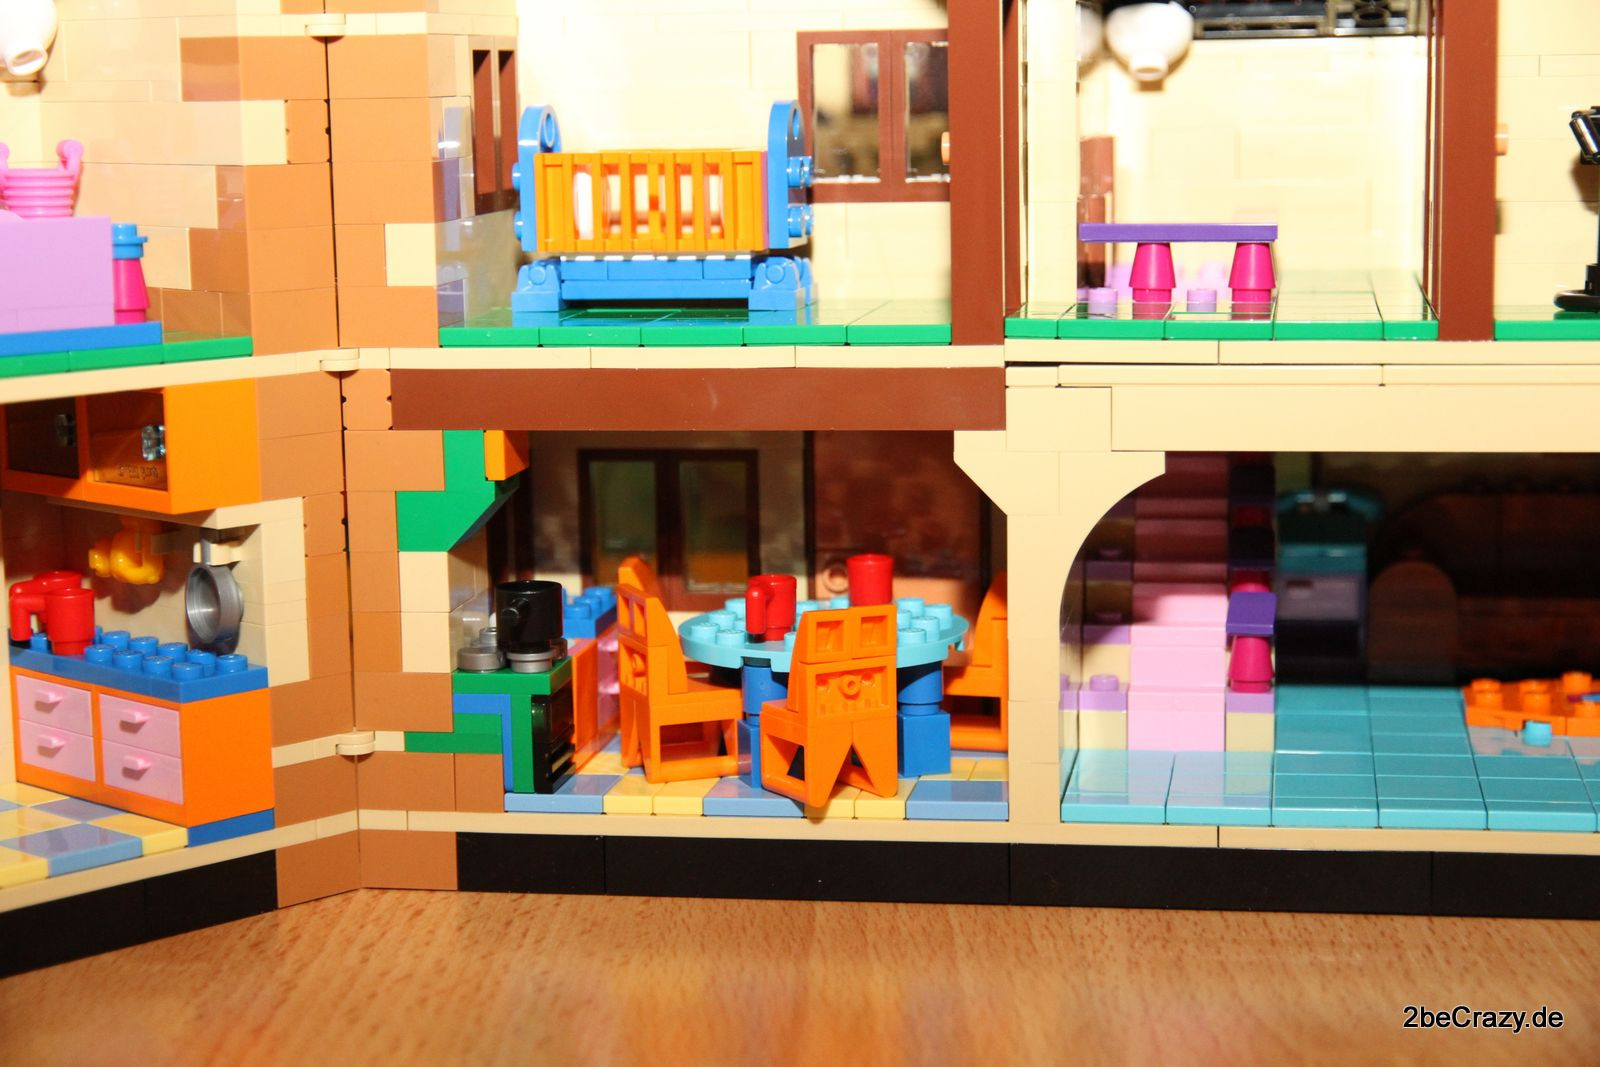 Lego Simpsons Haus
 simpsons haus lego 53 2beCrazy